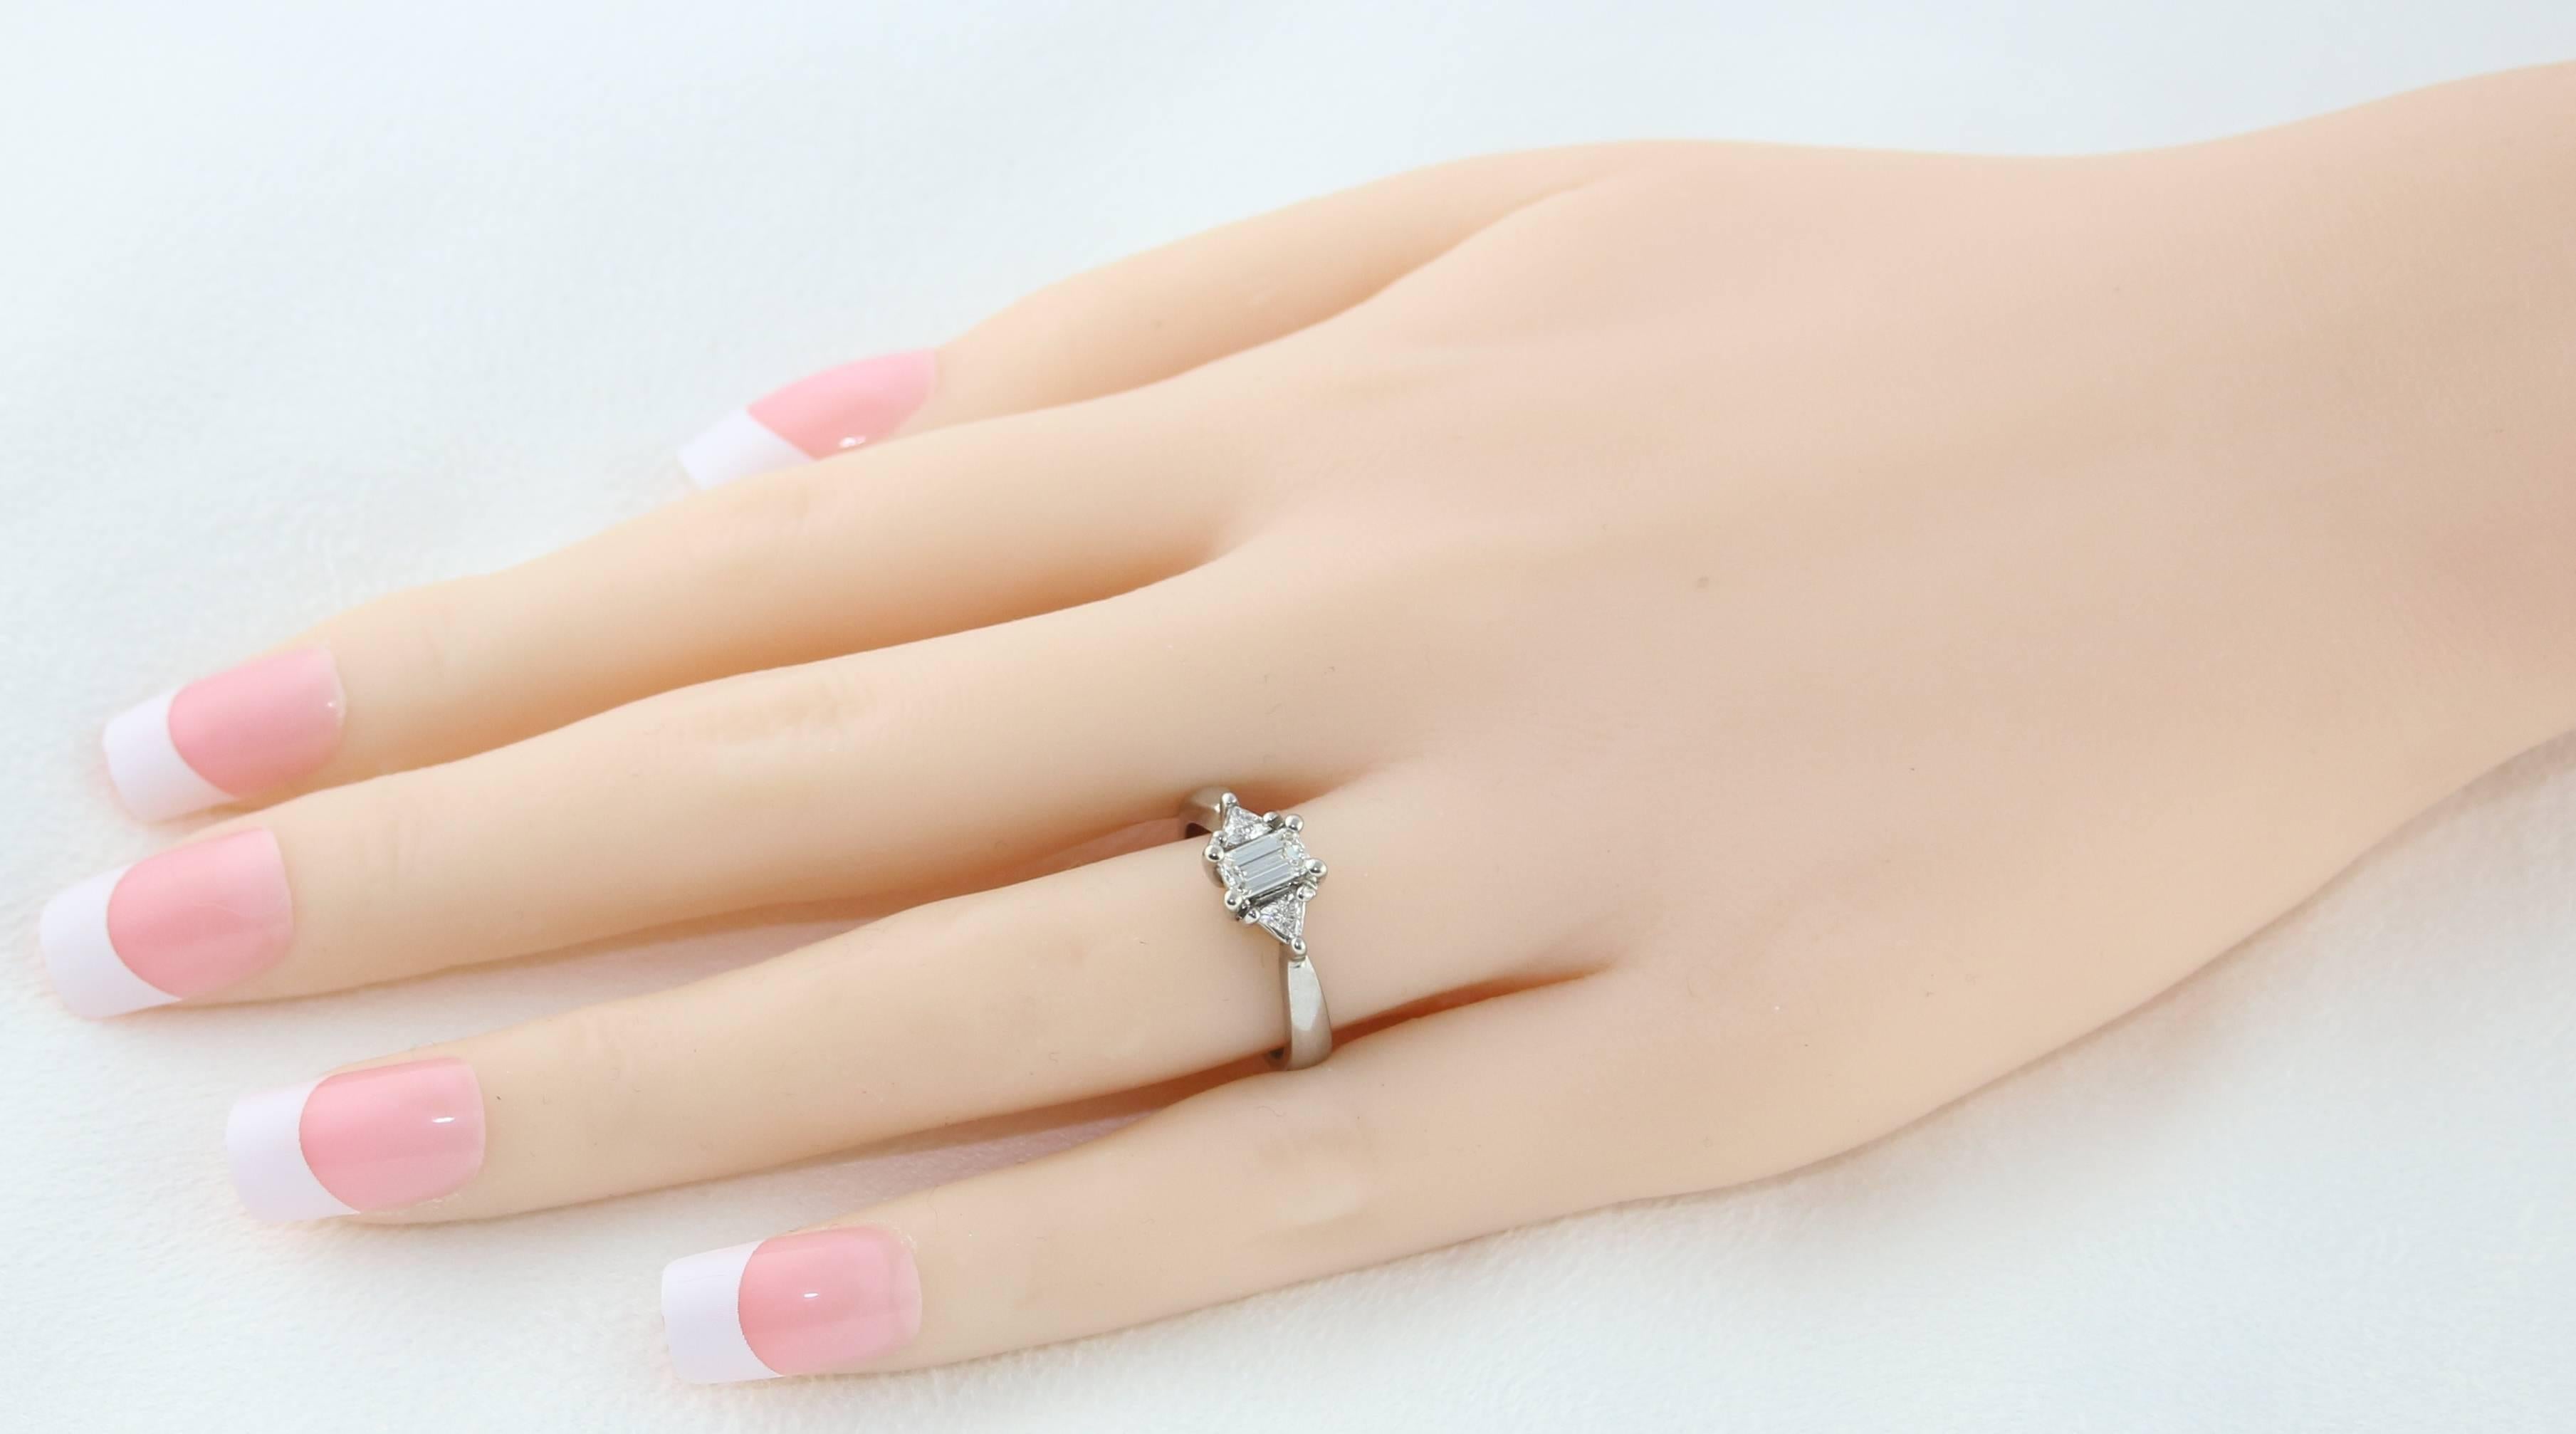 0.71 carat diamond ring